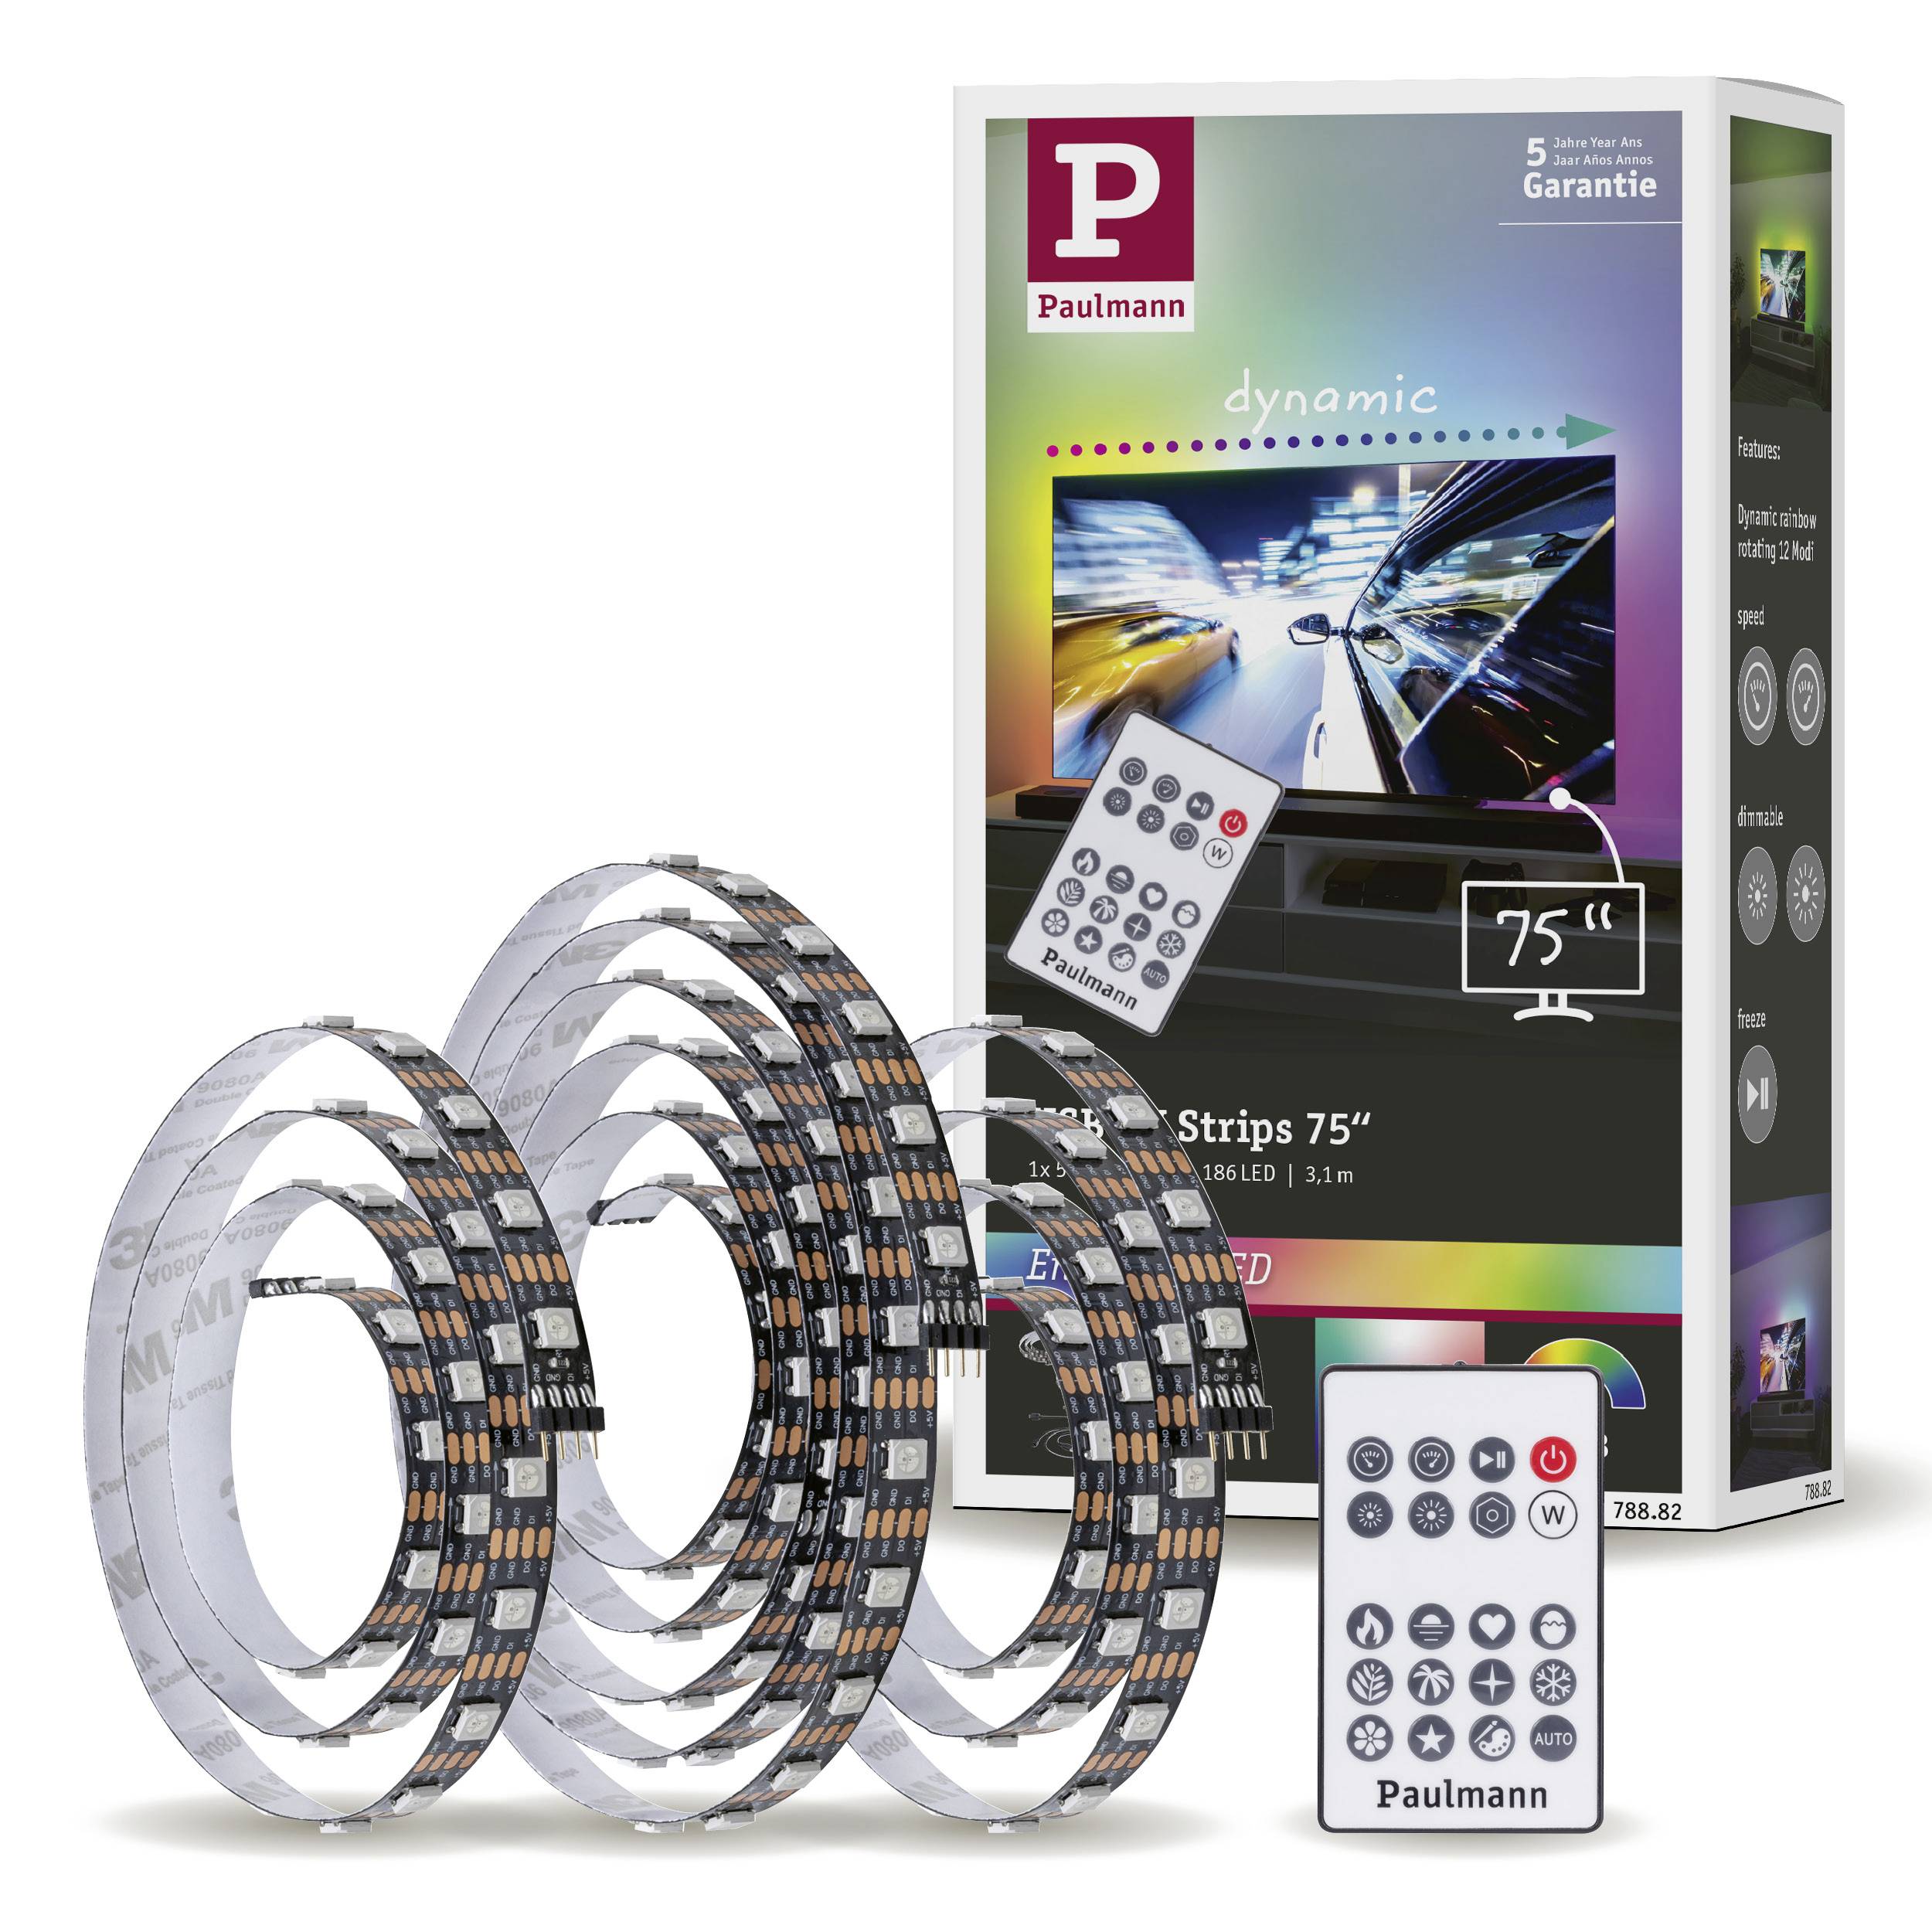 PAULMANN TV Strips 75 Zoll 78882 LED-Streifen-Basisset mit USB-Anschluss 5 V 3.1 m RGB